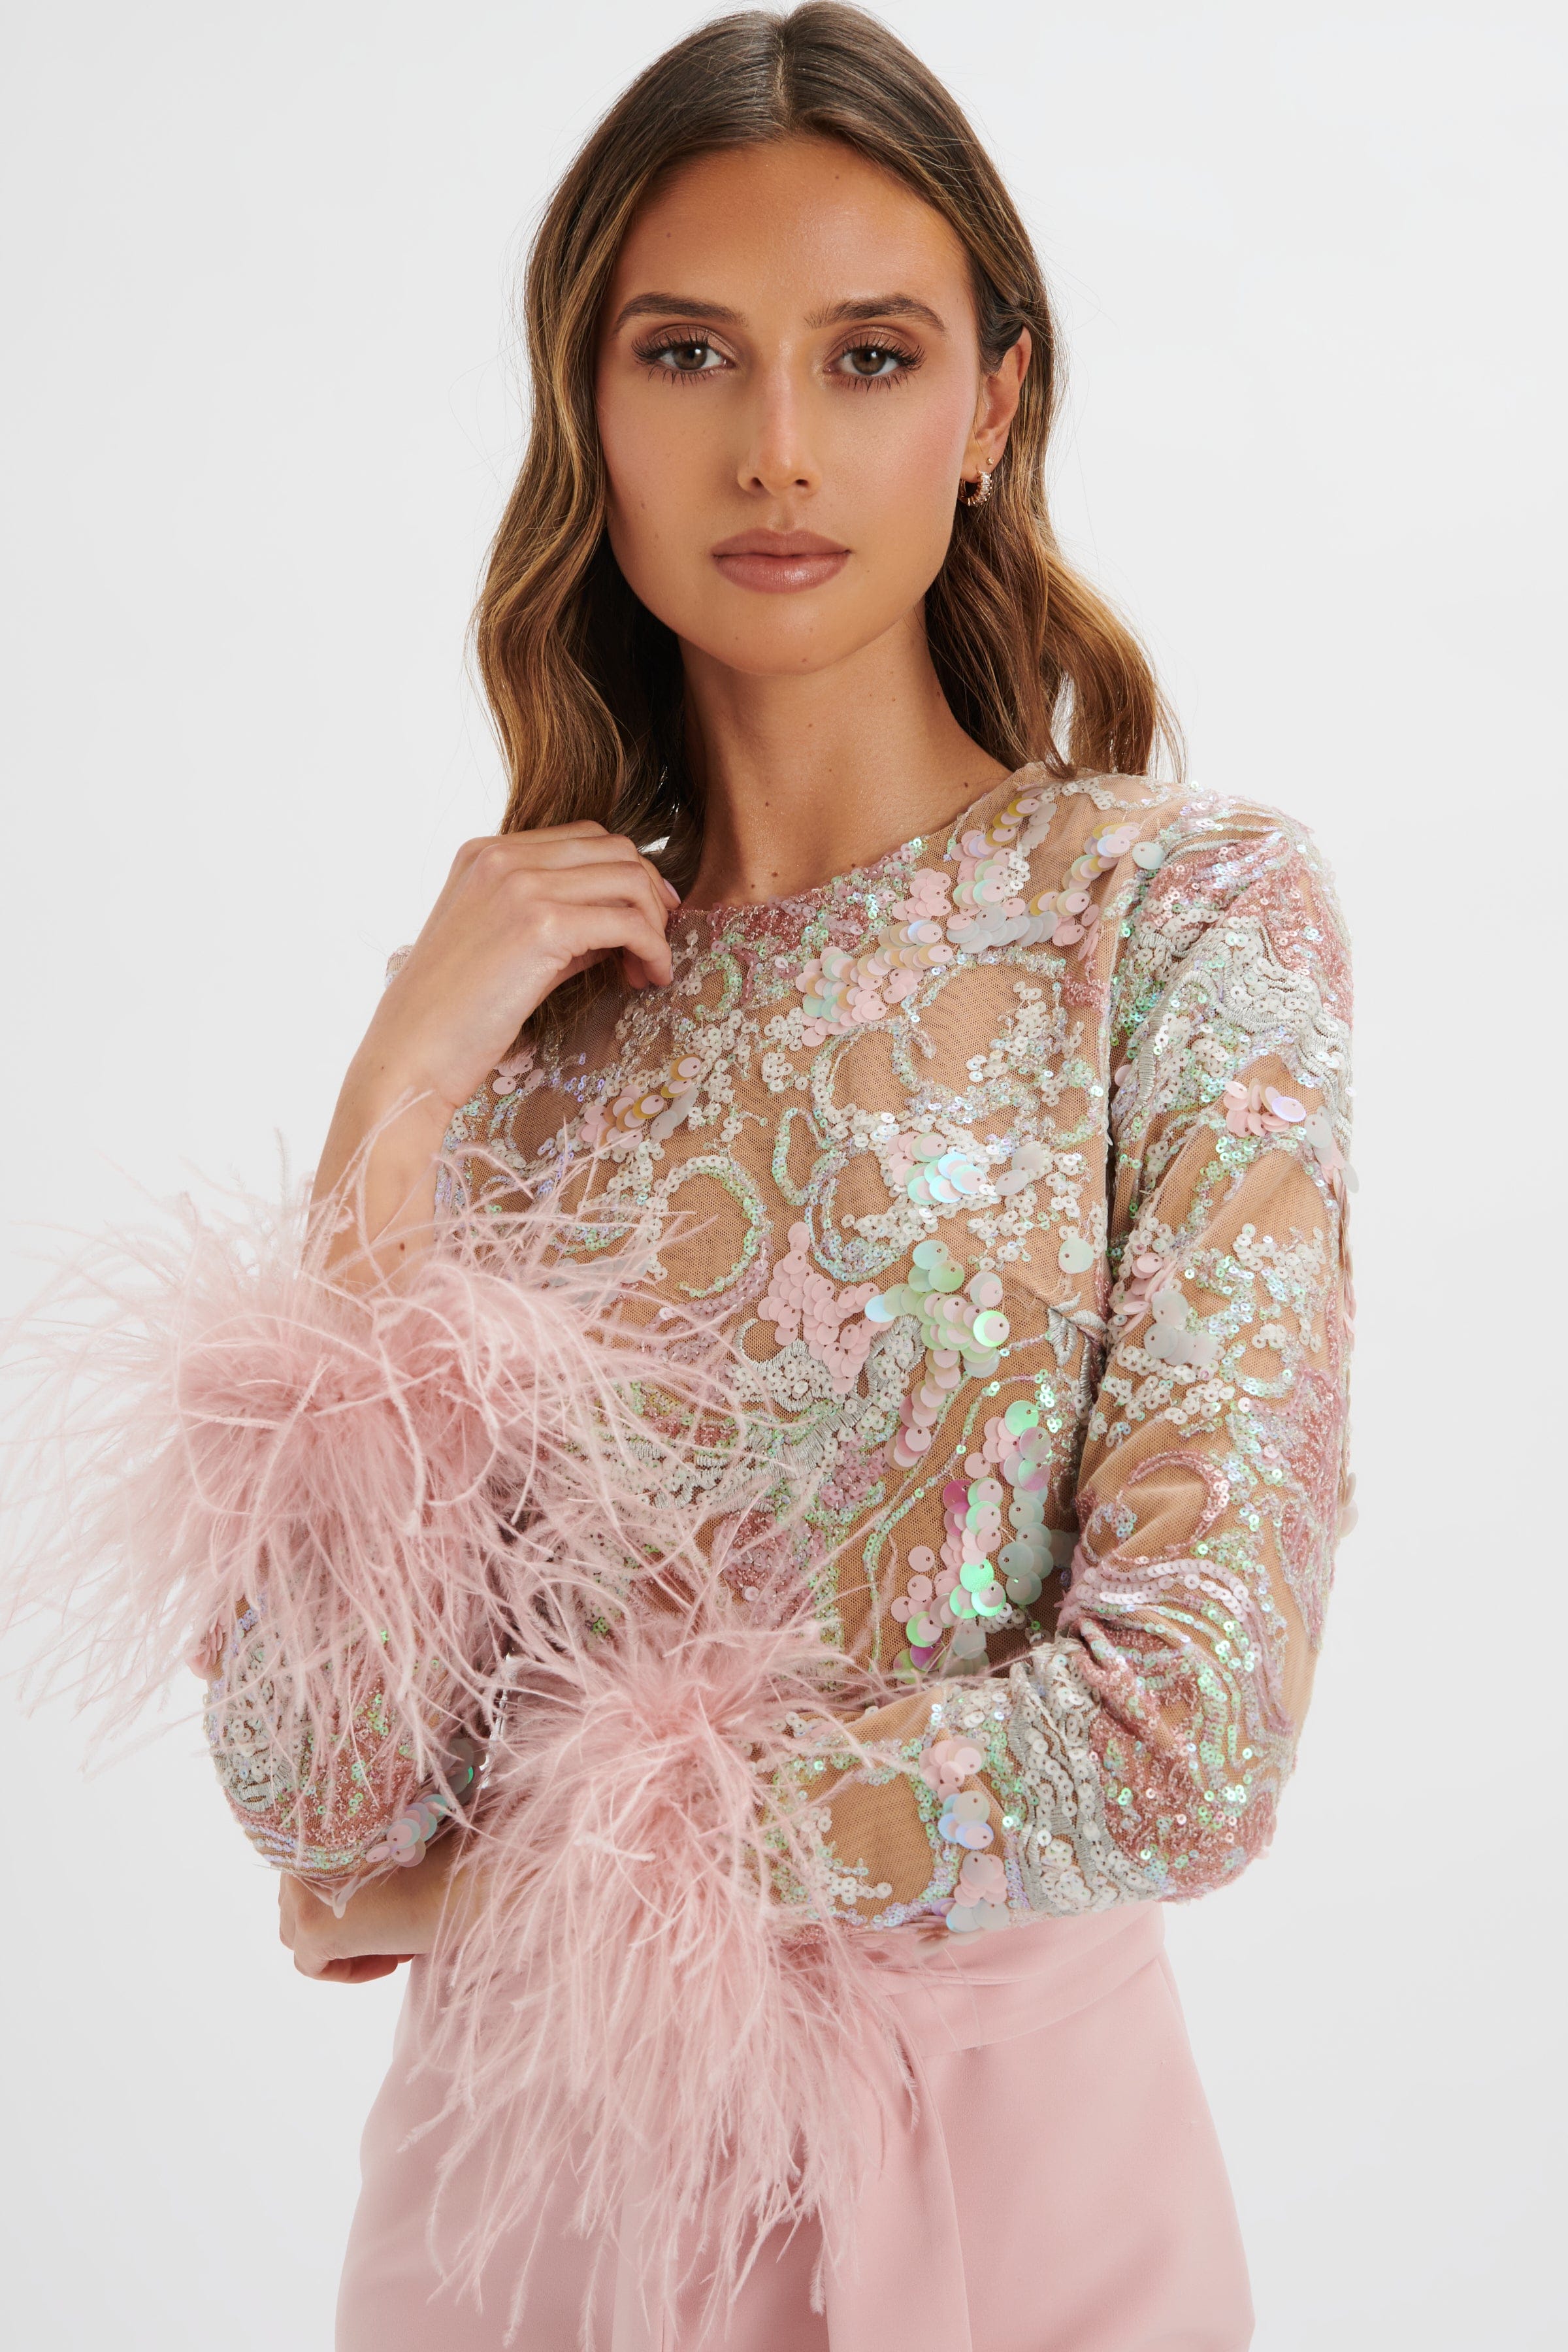 MEDINA Embellished Feather Cuff Mini Dress in Pink